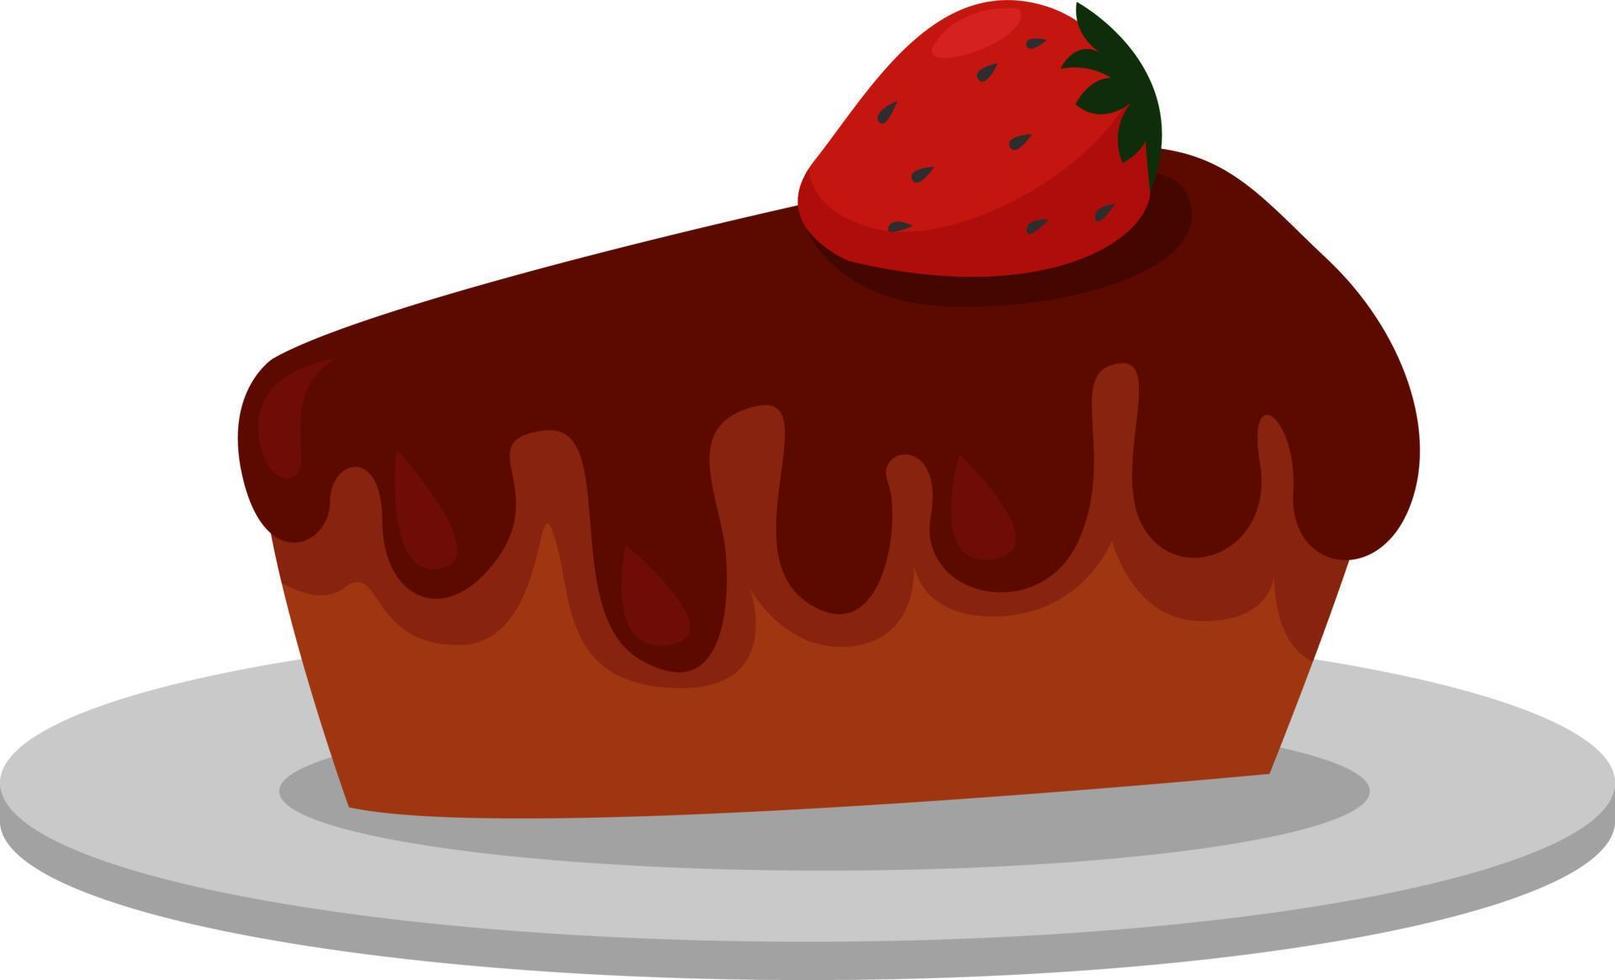 Strawberry cake, illustration, vector on white background